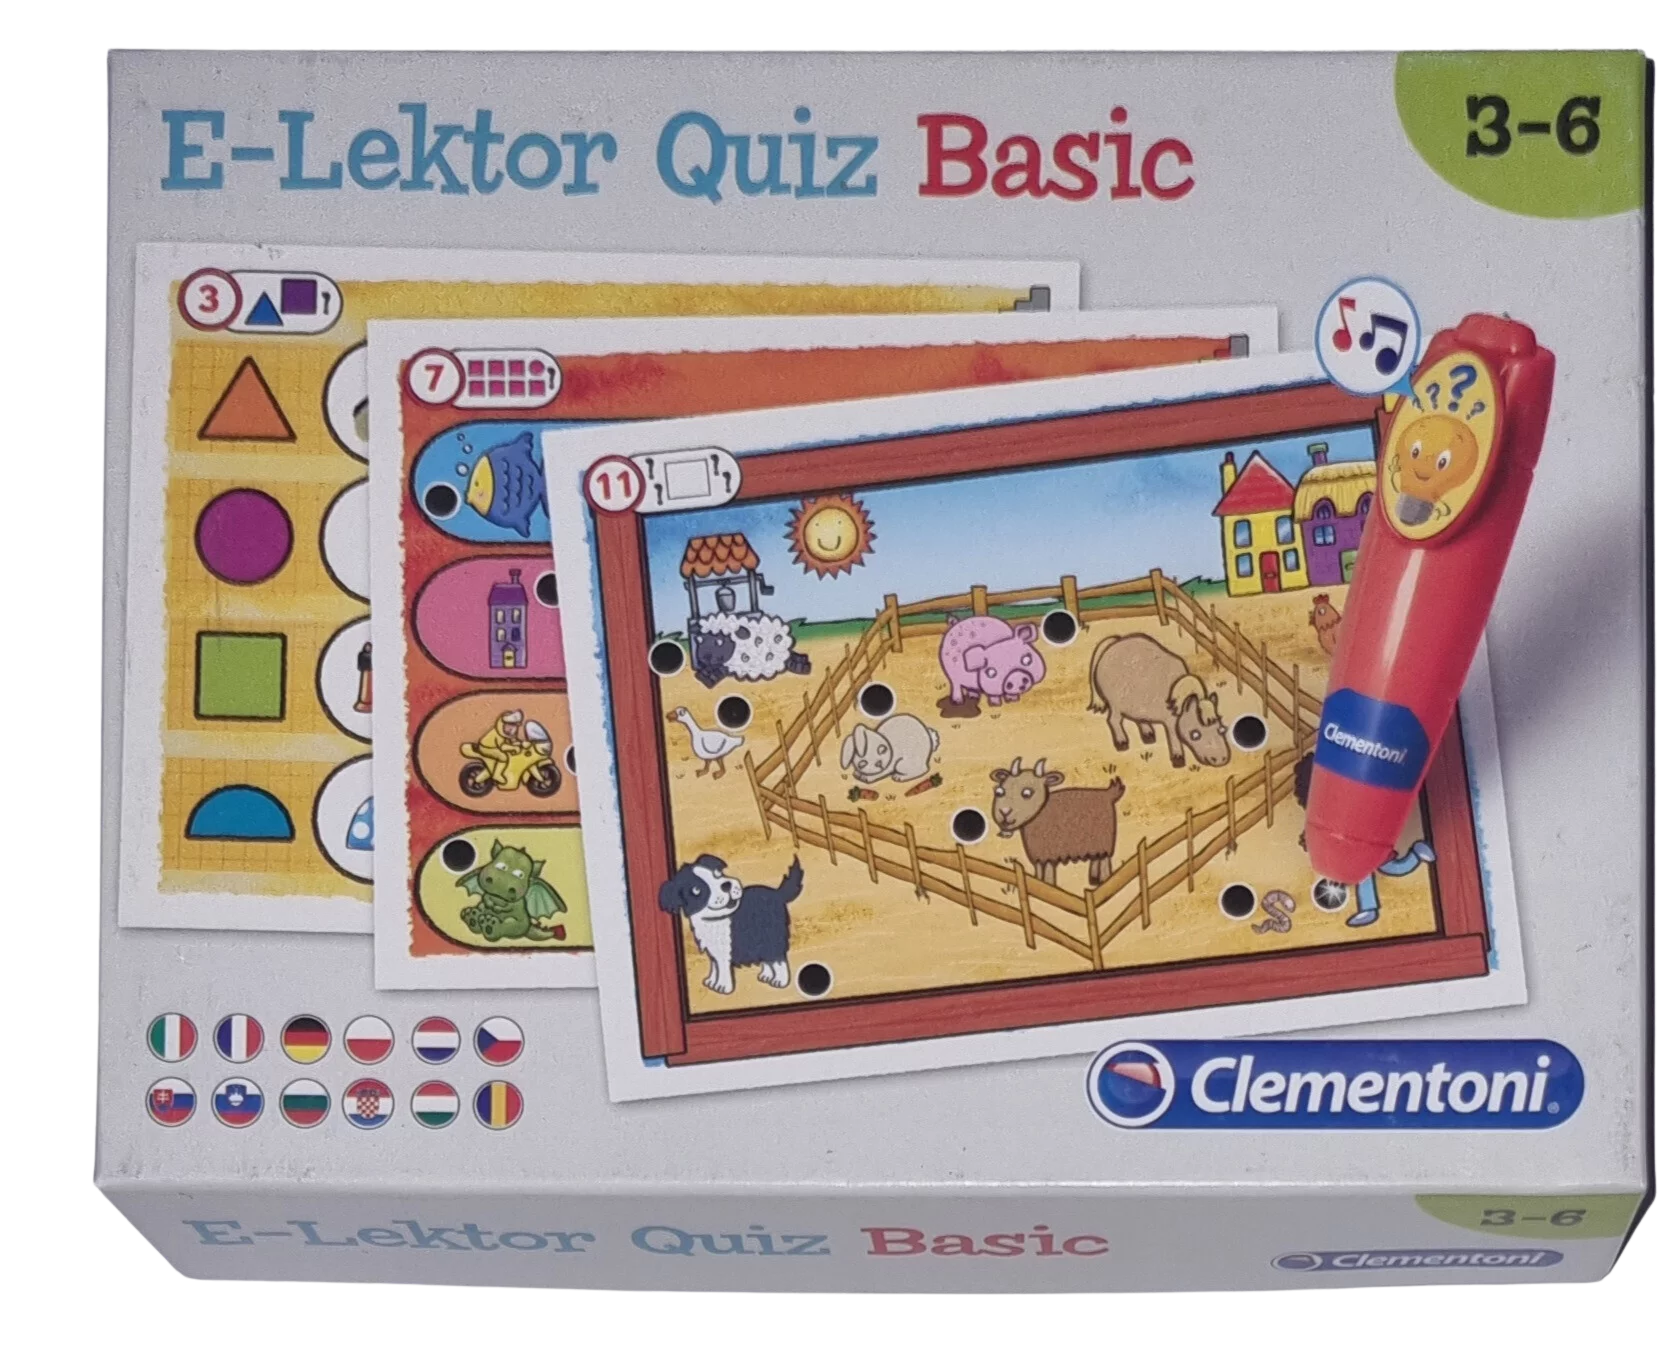 Clementoni E-Lektor Quiz Basic